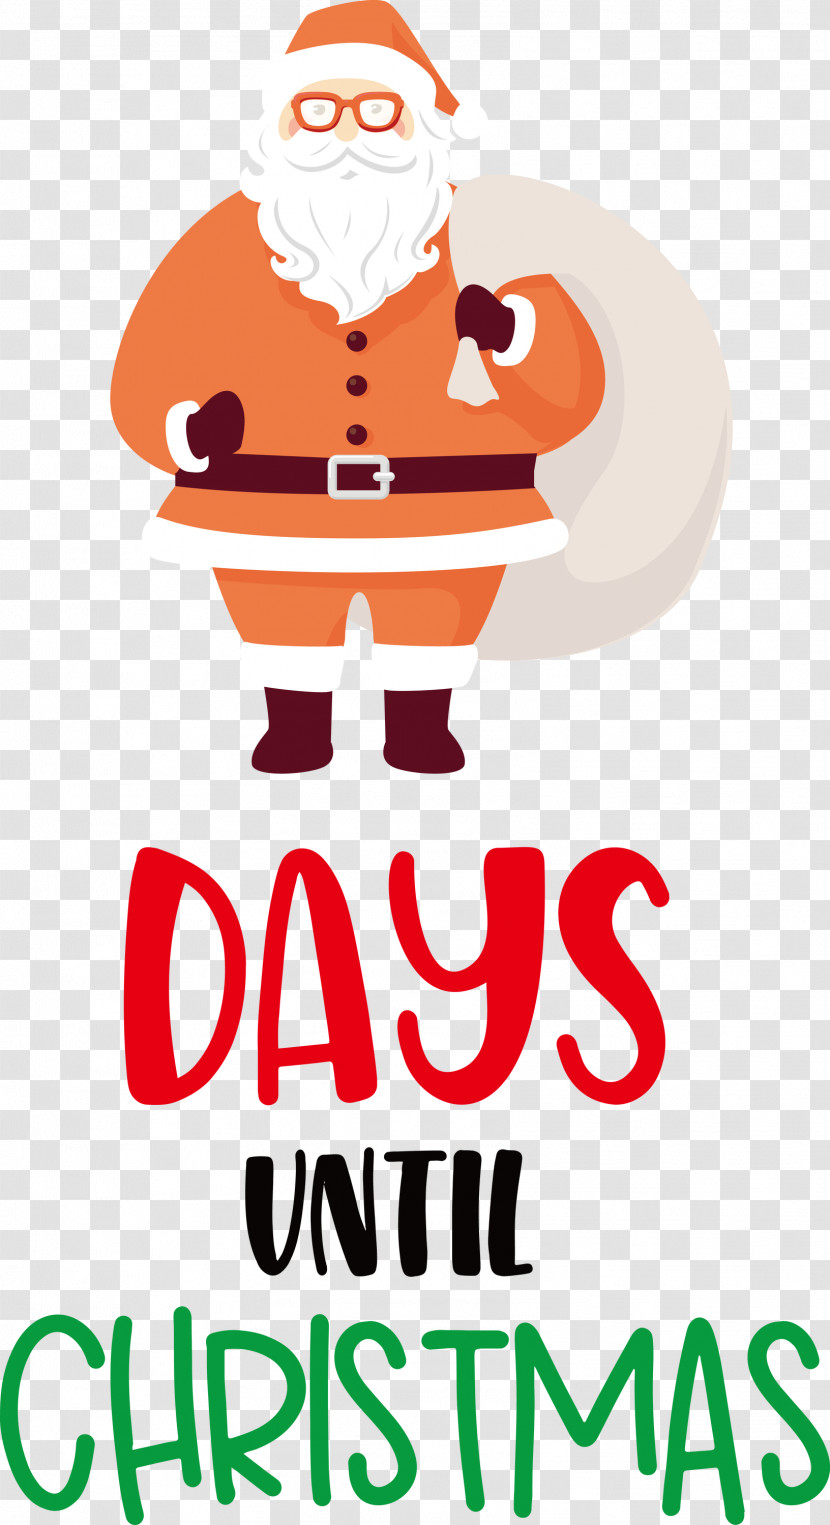 Days Until Christmas Christmas Santa Claus Transparent PNG